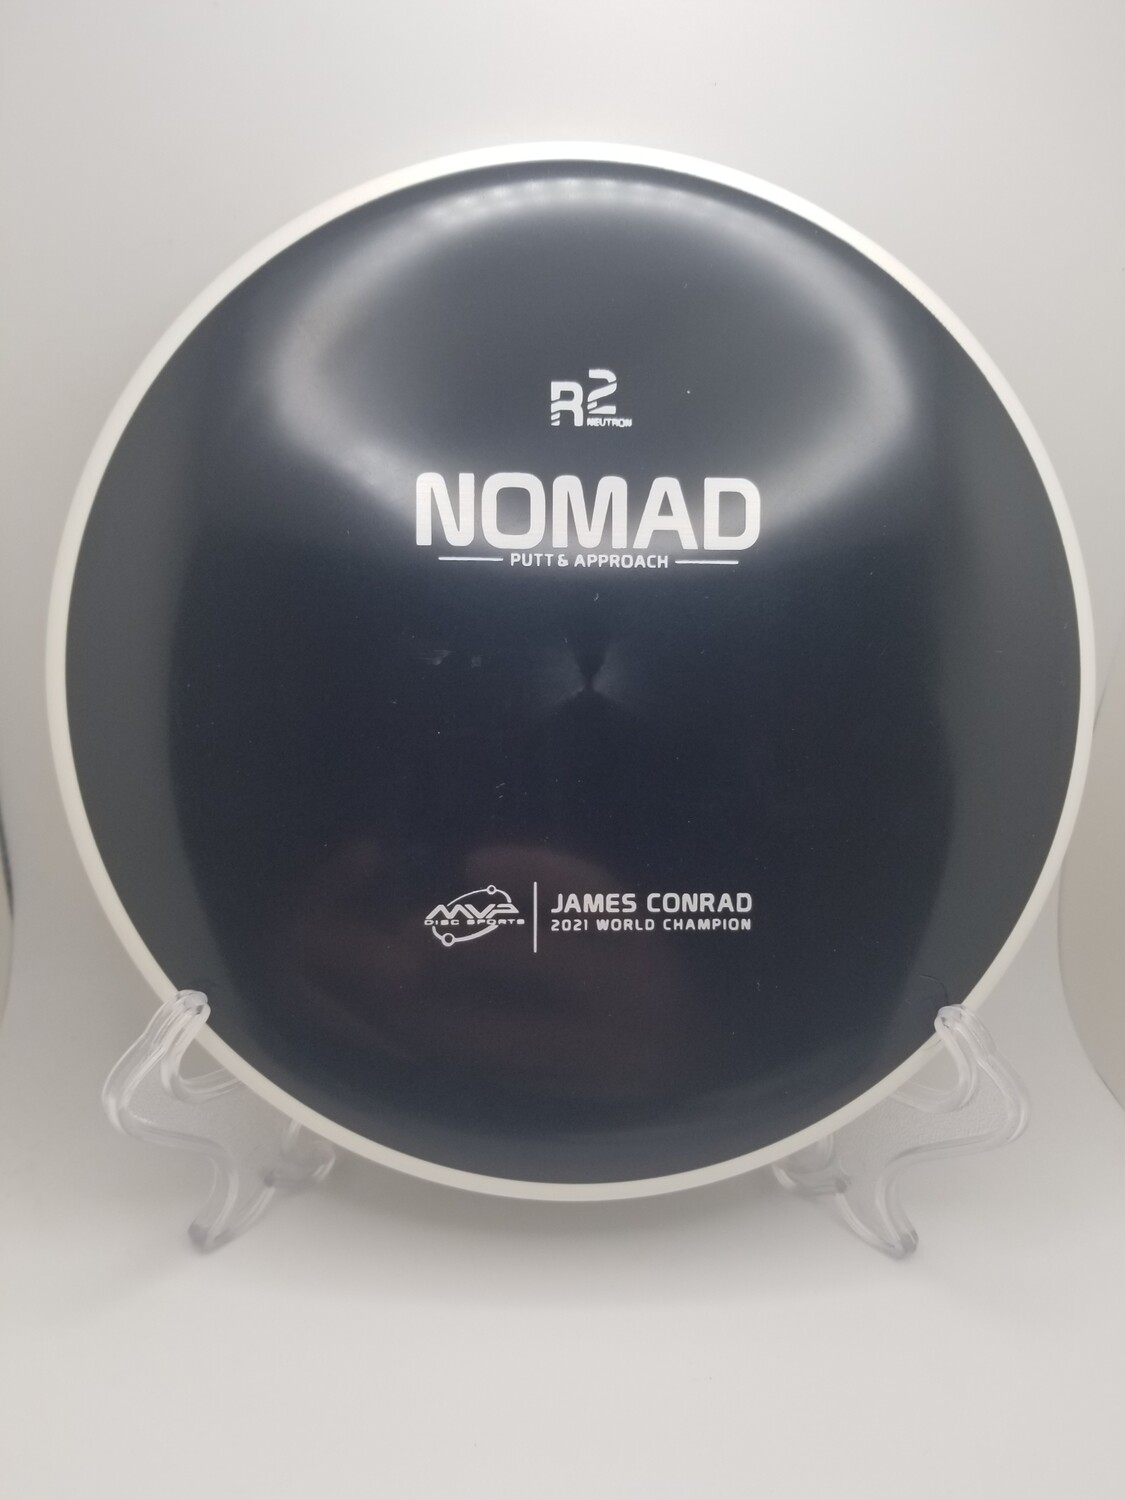 MVP Discs Black R2 Neutron Nomad James Conrad Series 170-175g.